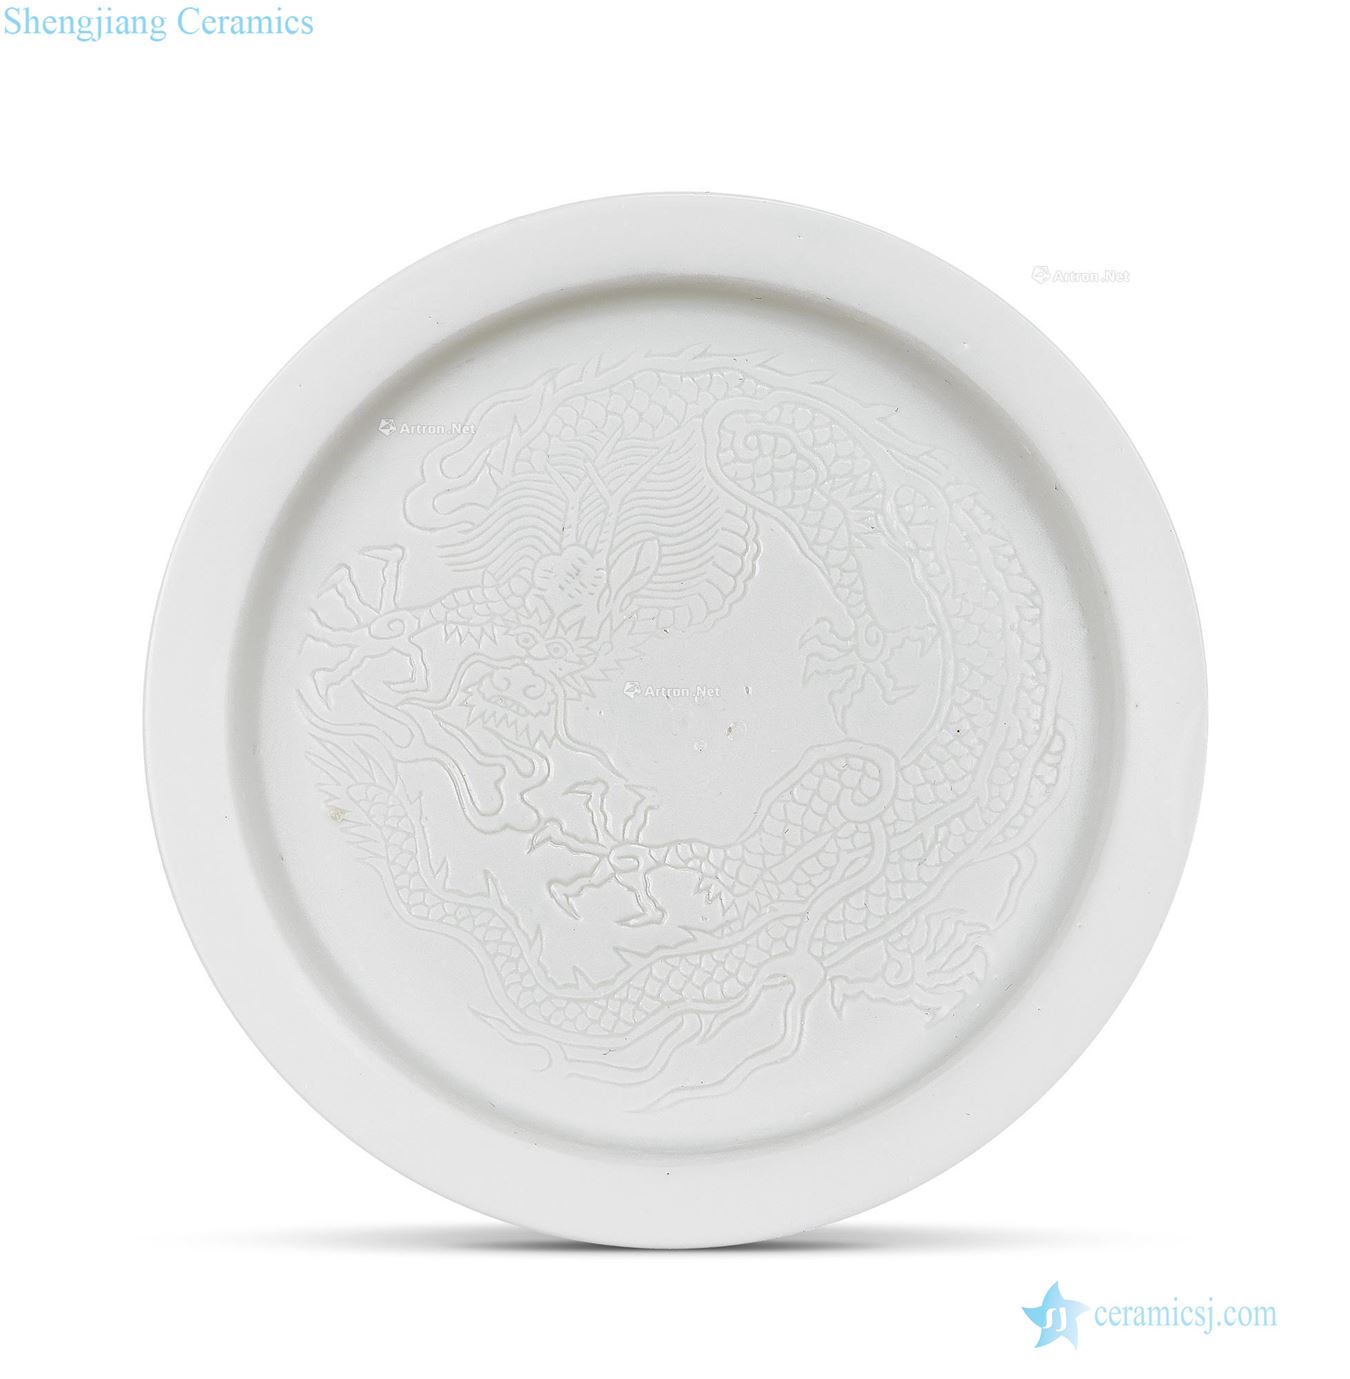 Ming dynasty white glaze dark carved dragon pattern plate